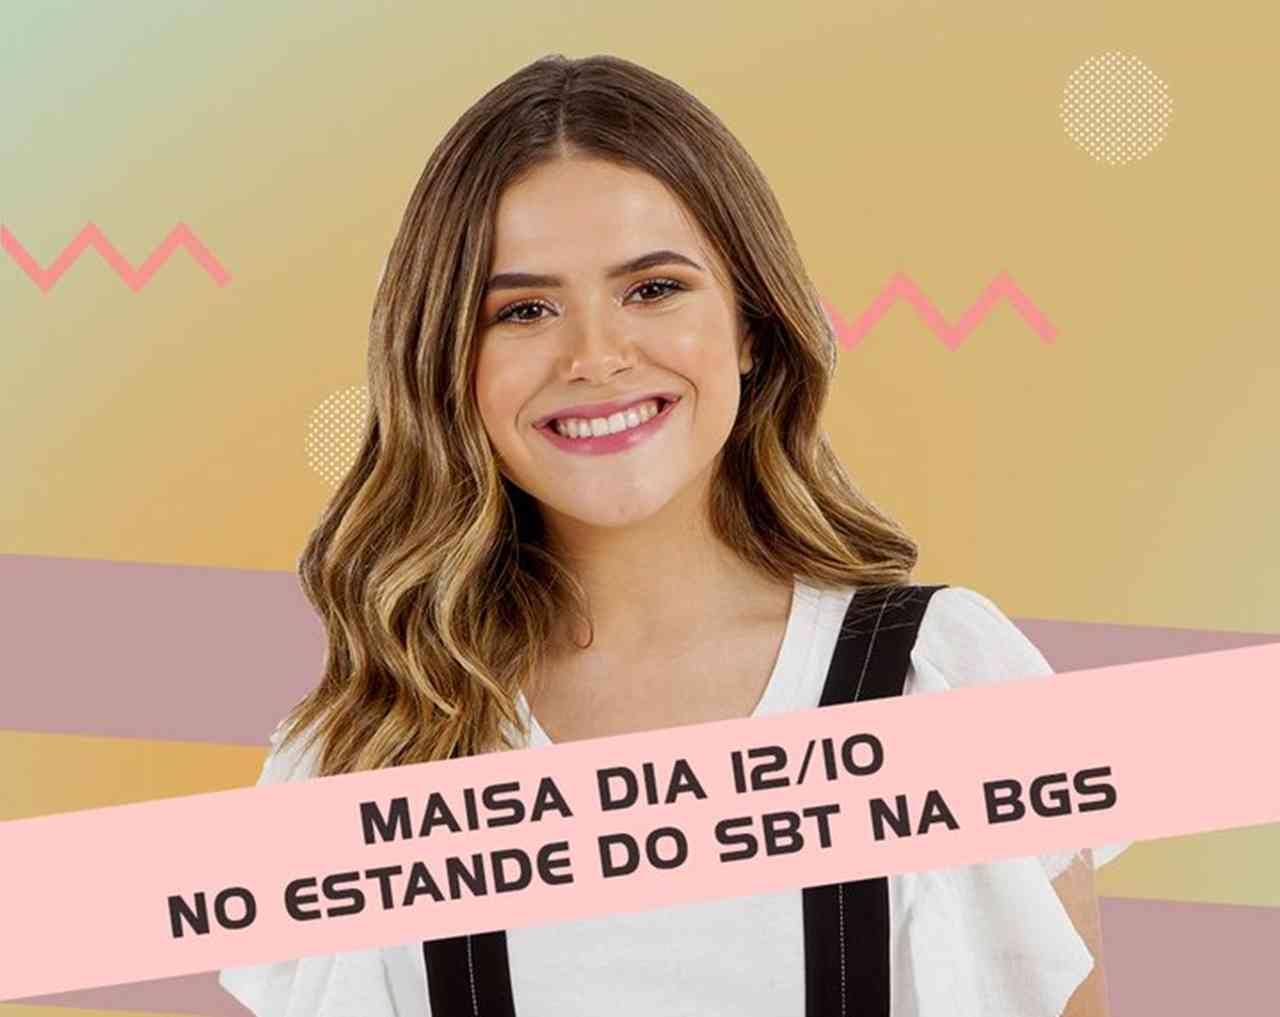 BGS 2019 | Maísa estará presente no evento 41